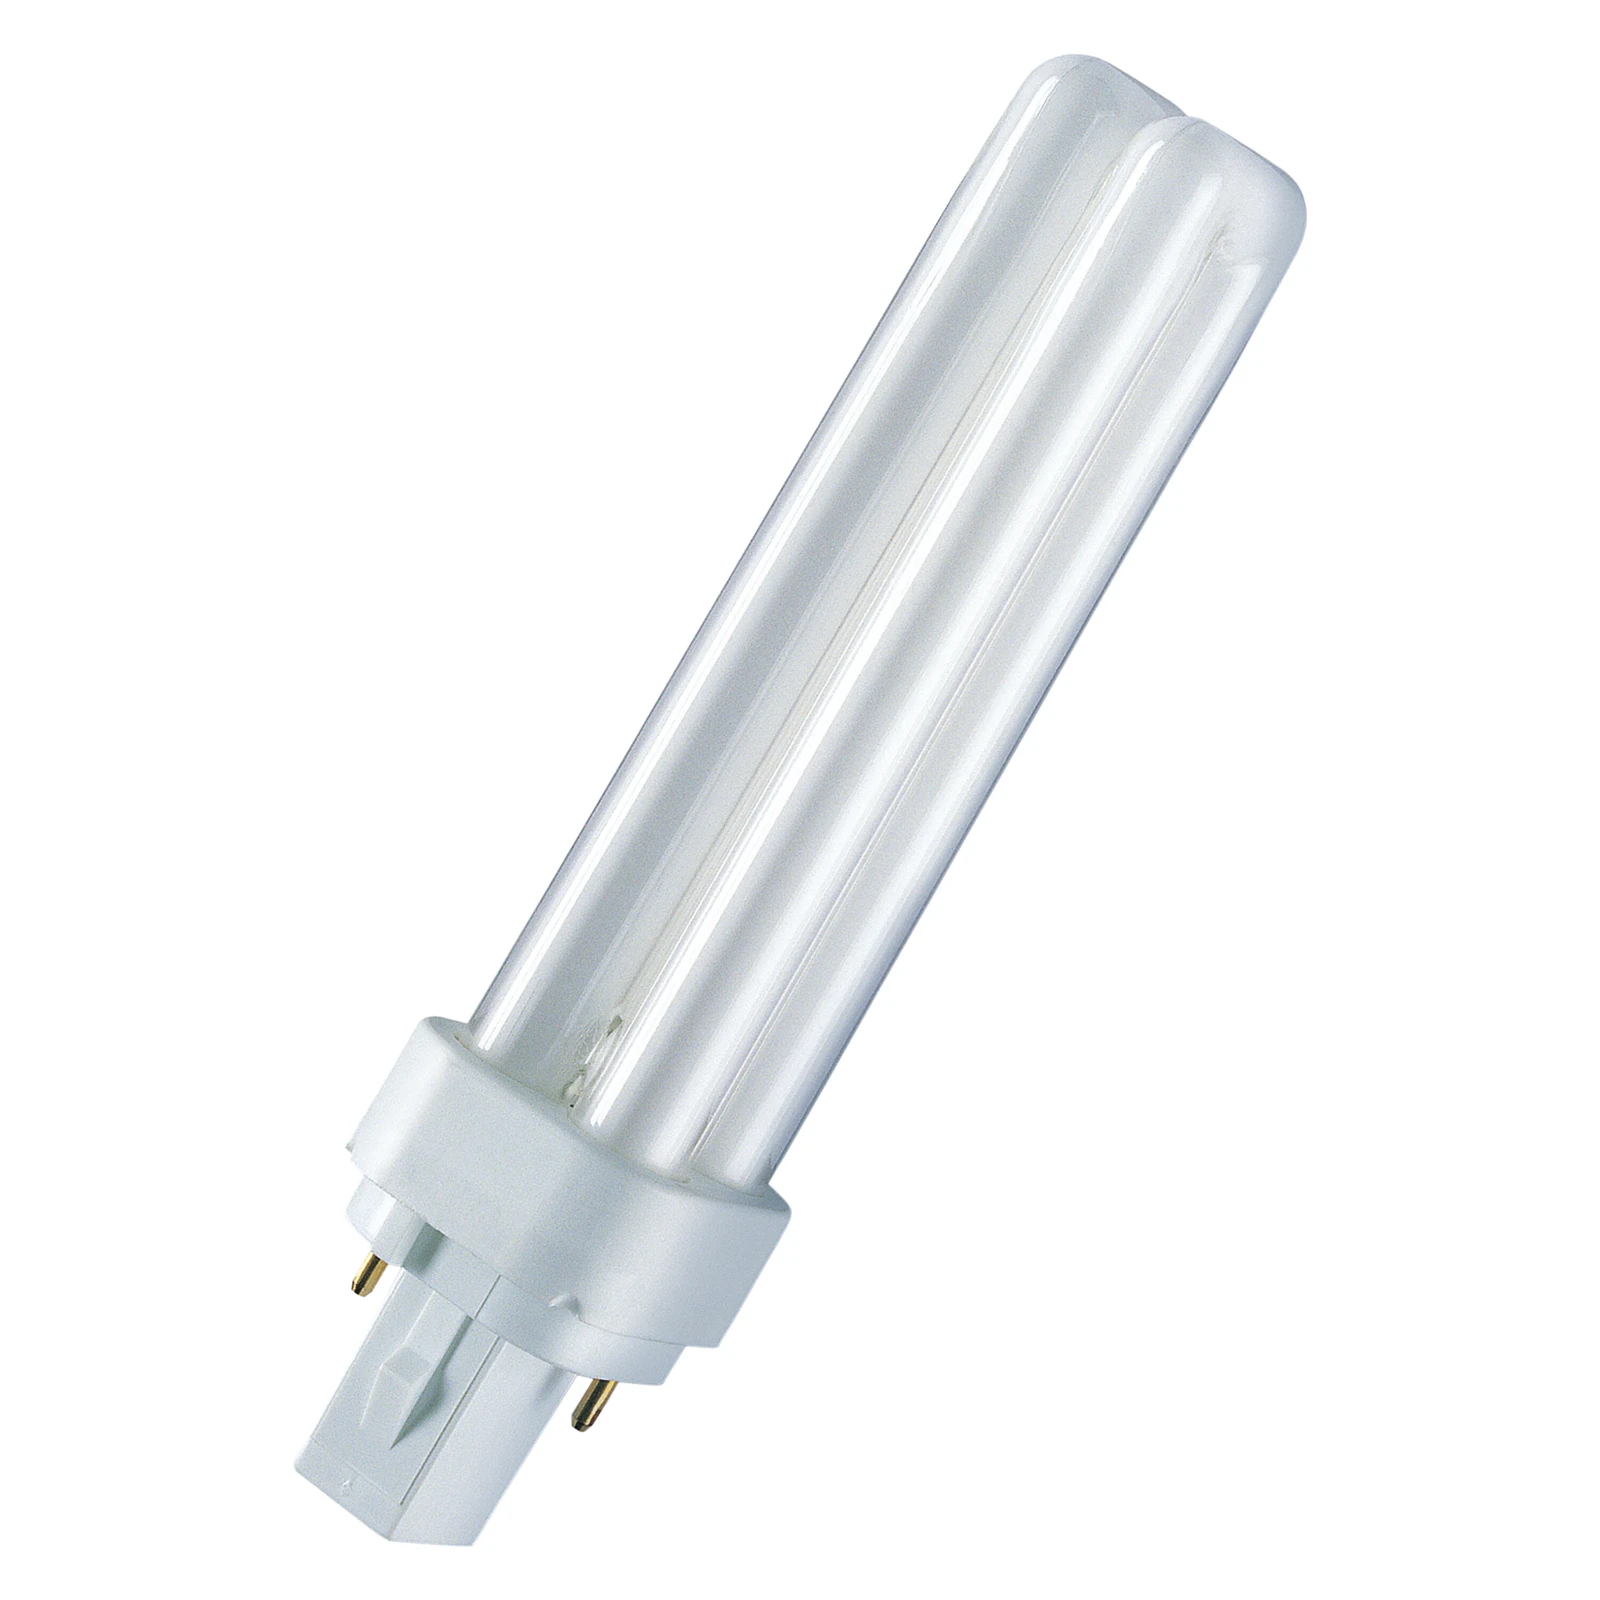 Osram Compact fluorescentielamp zonder geïntegreerd voorschakelapparaat DULUX D 13W/840 G24D-1 FS1